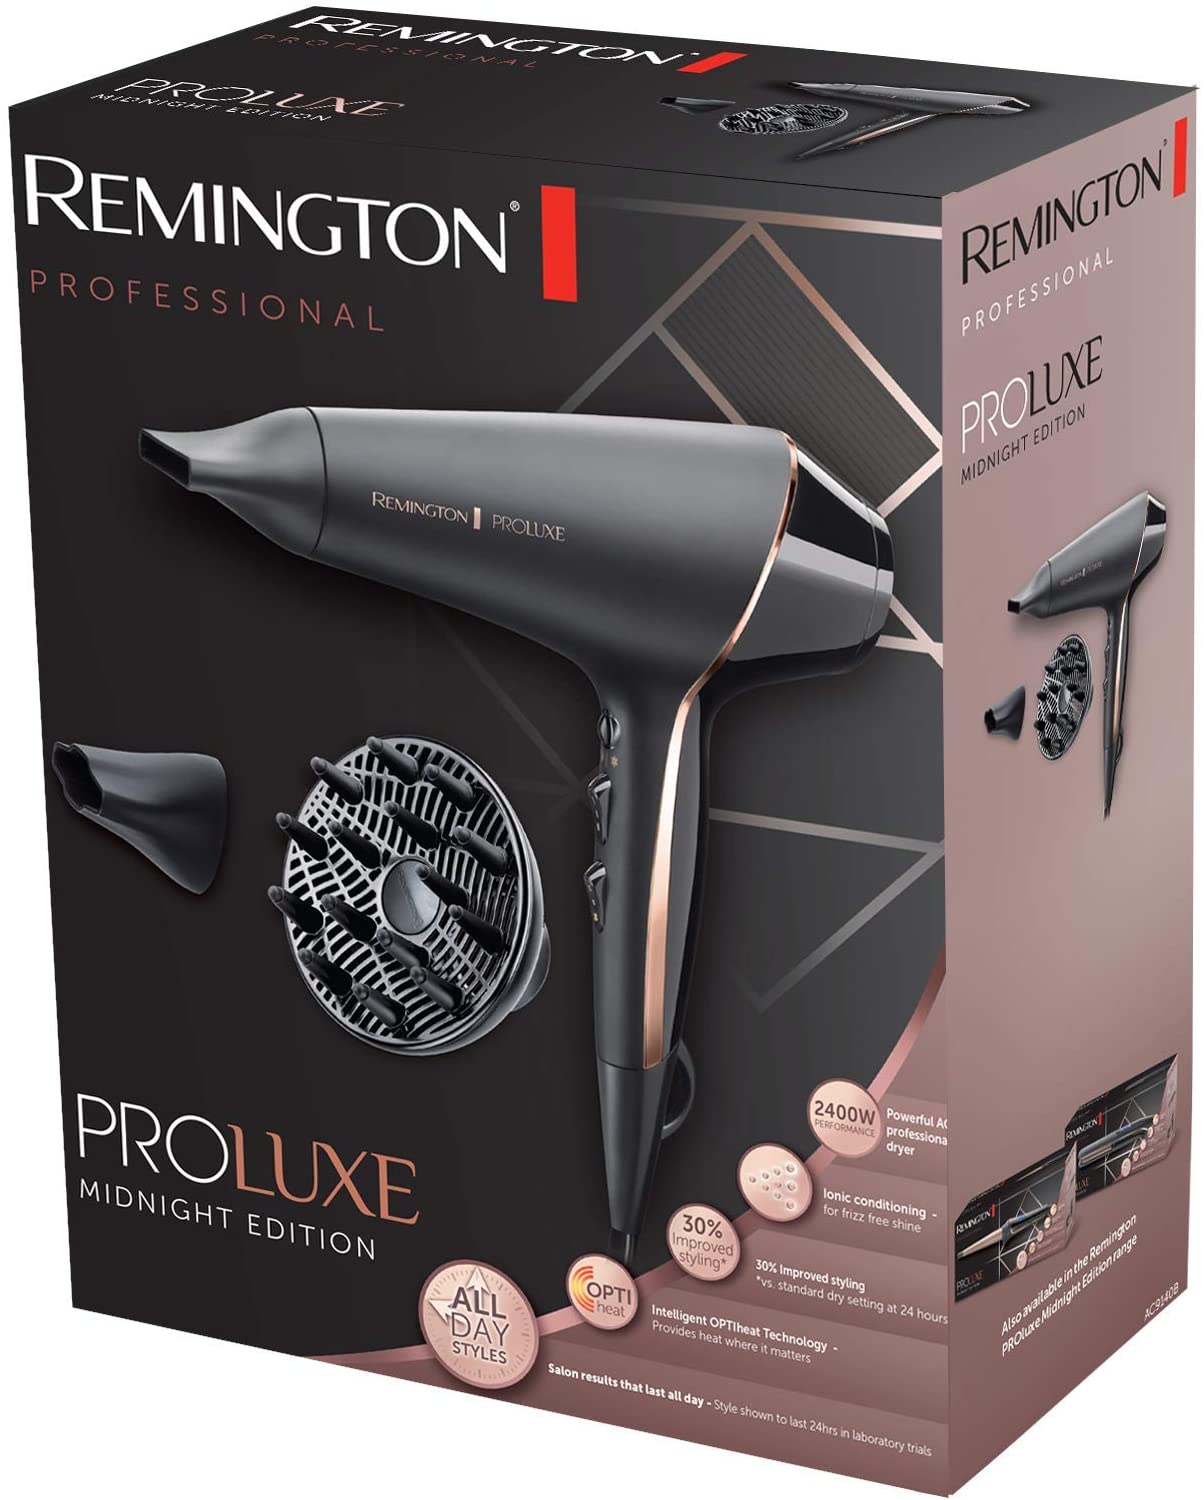 REMINGTON AC9140B Proluxe Midnight Edition Hairdryer